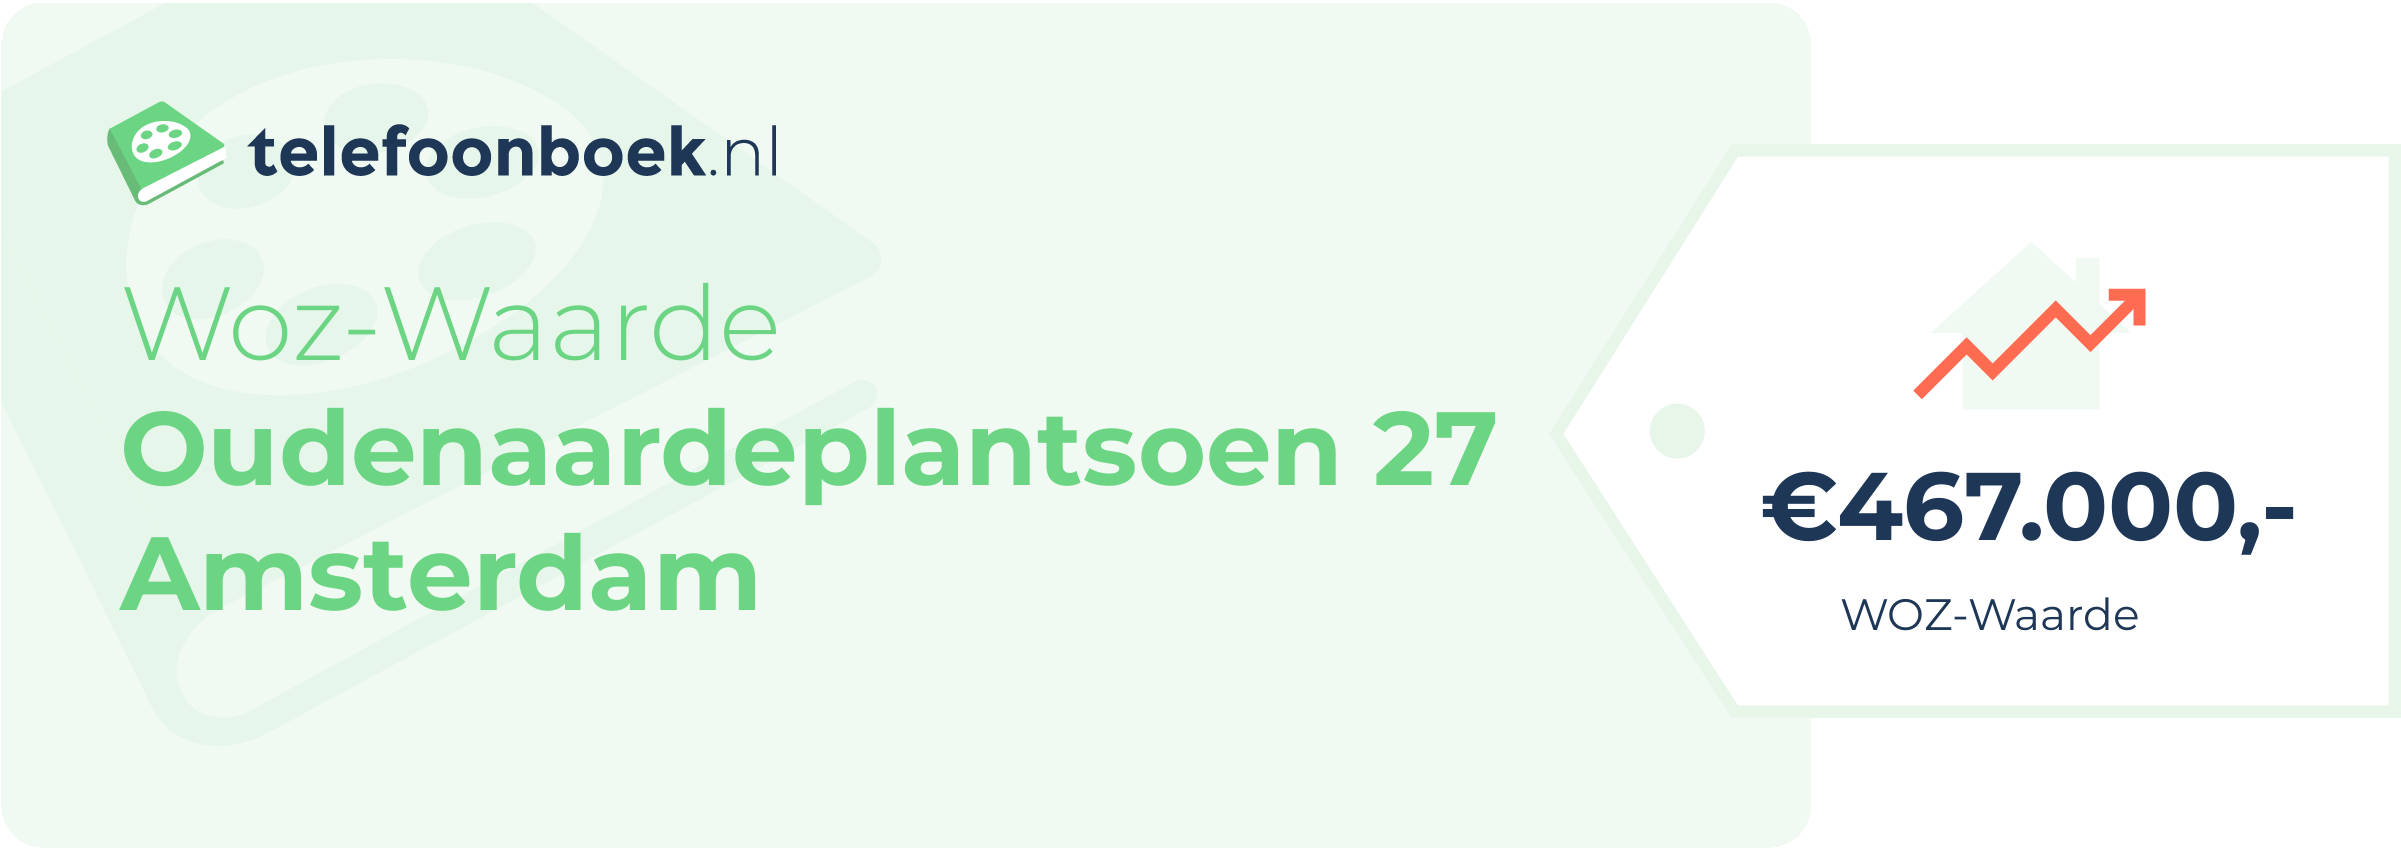 WOZ-waarde Oudenaardeplantsoen 27 Amsterdam